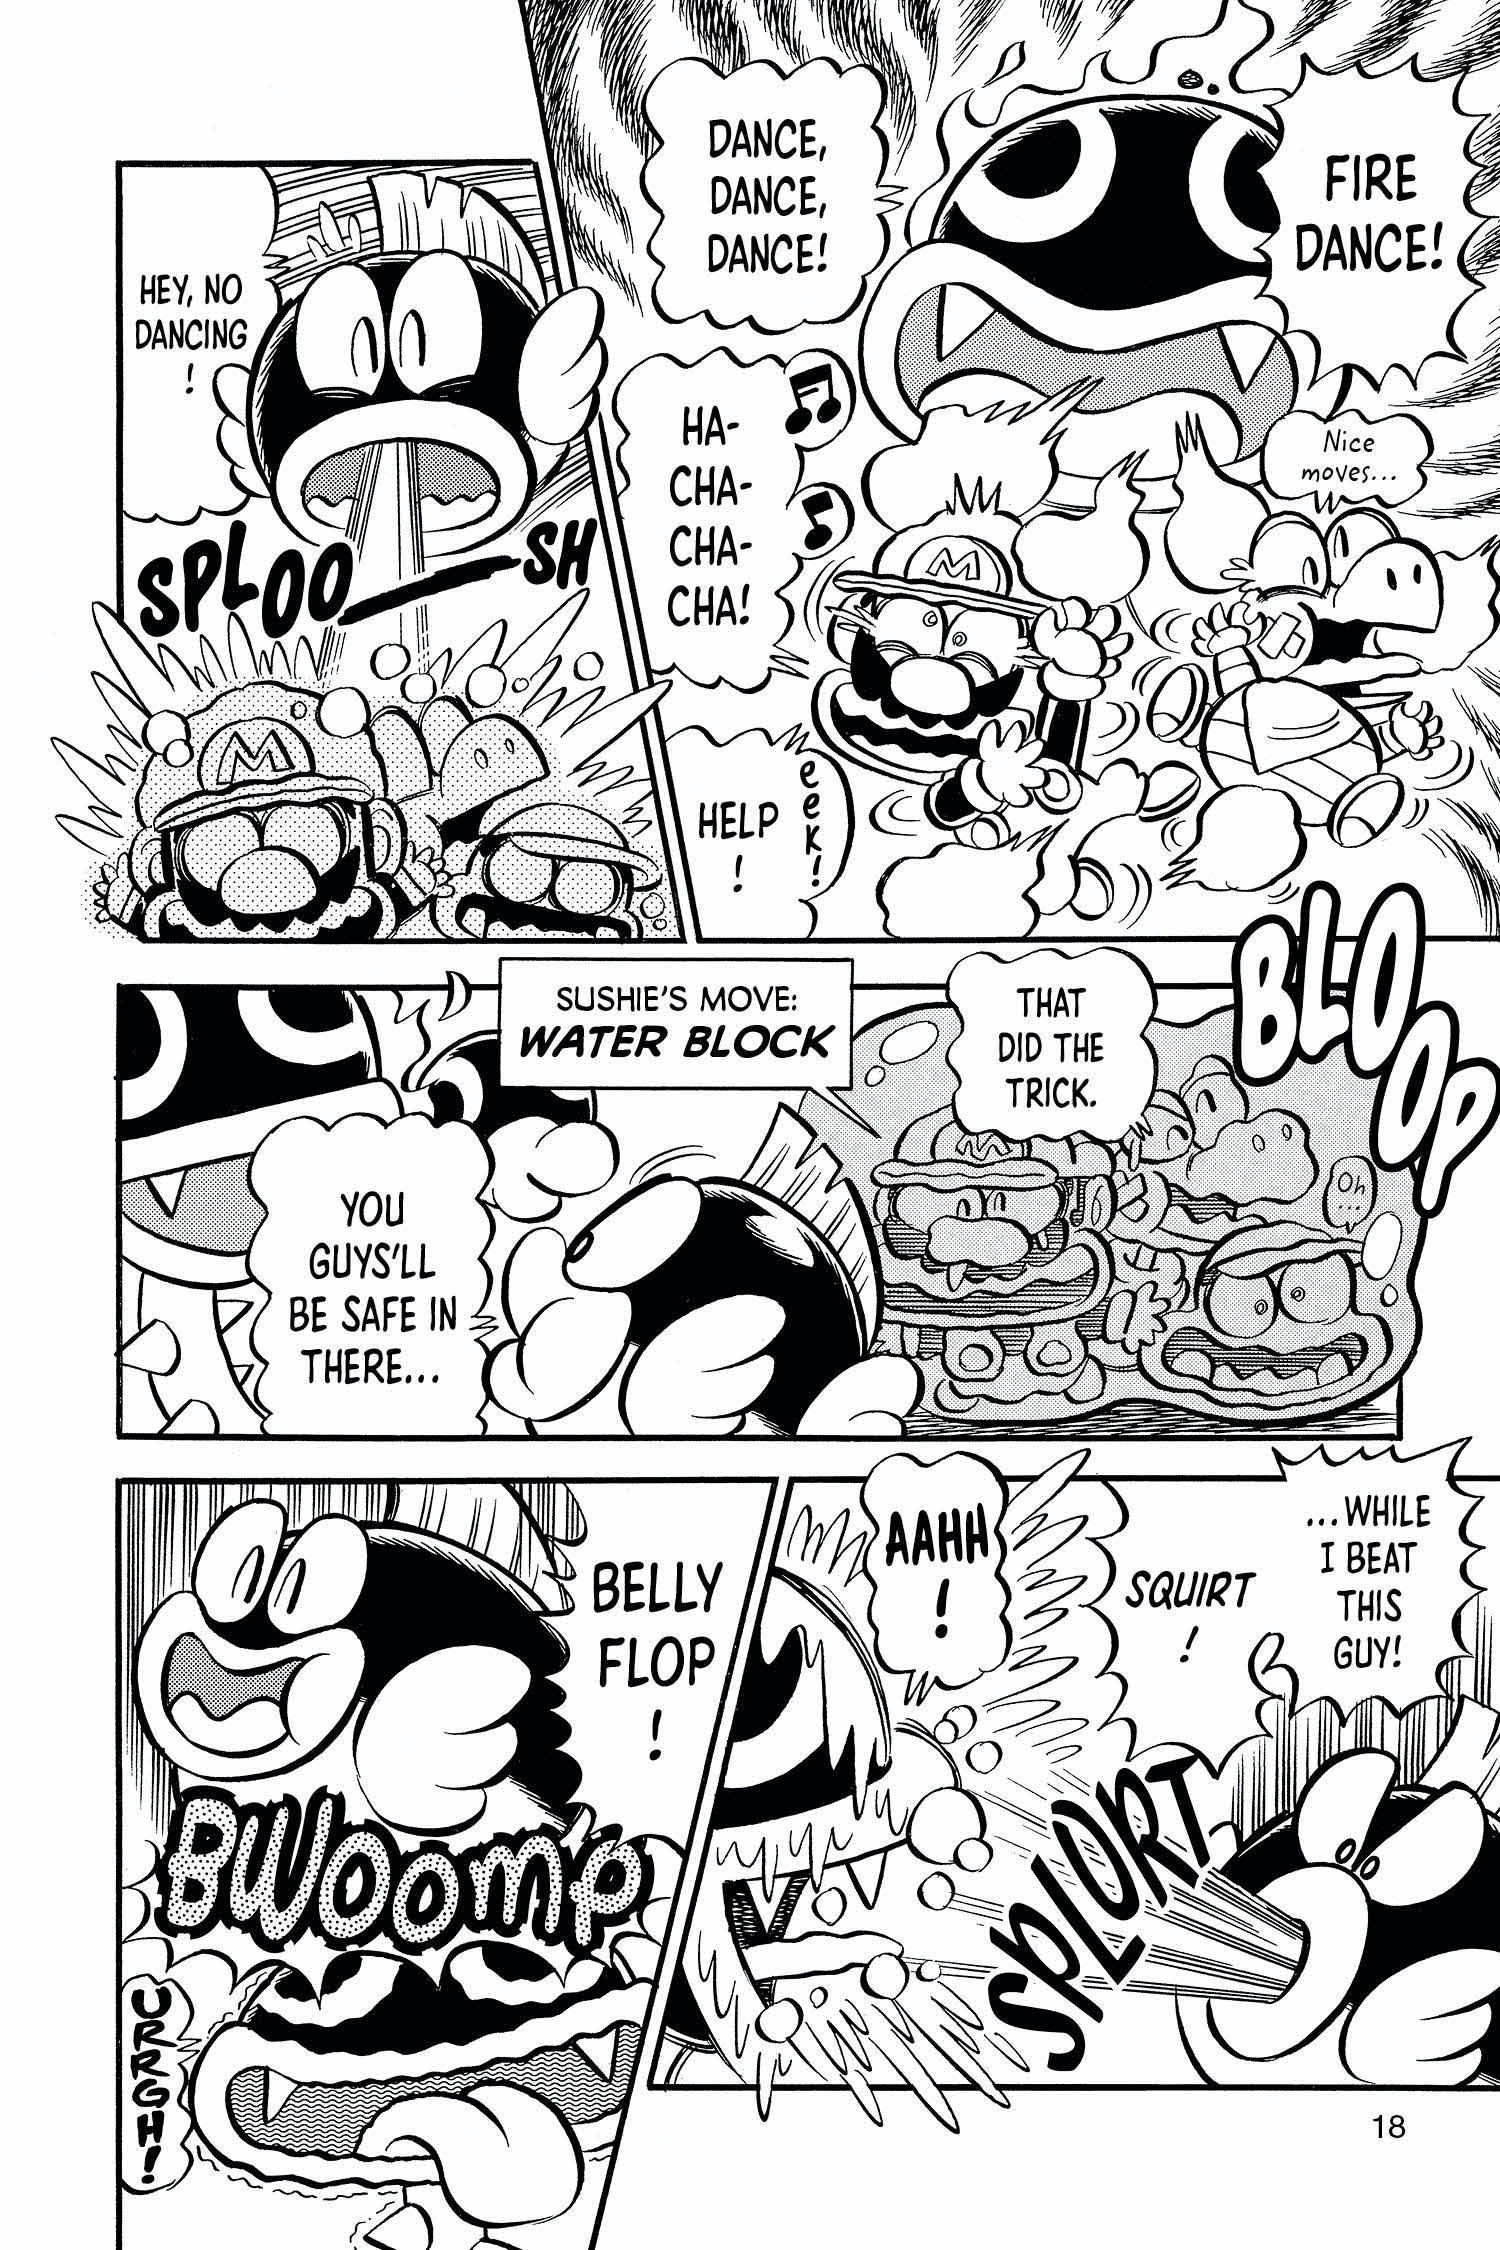 Mario doing battle with a Piranha Plant and some Cheep Cheeps. (Image: Viz Media)